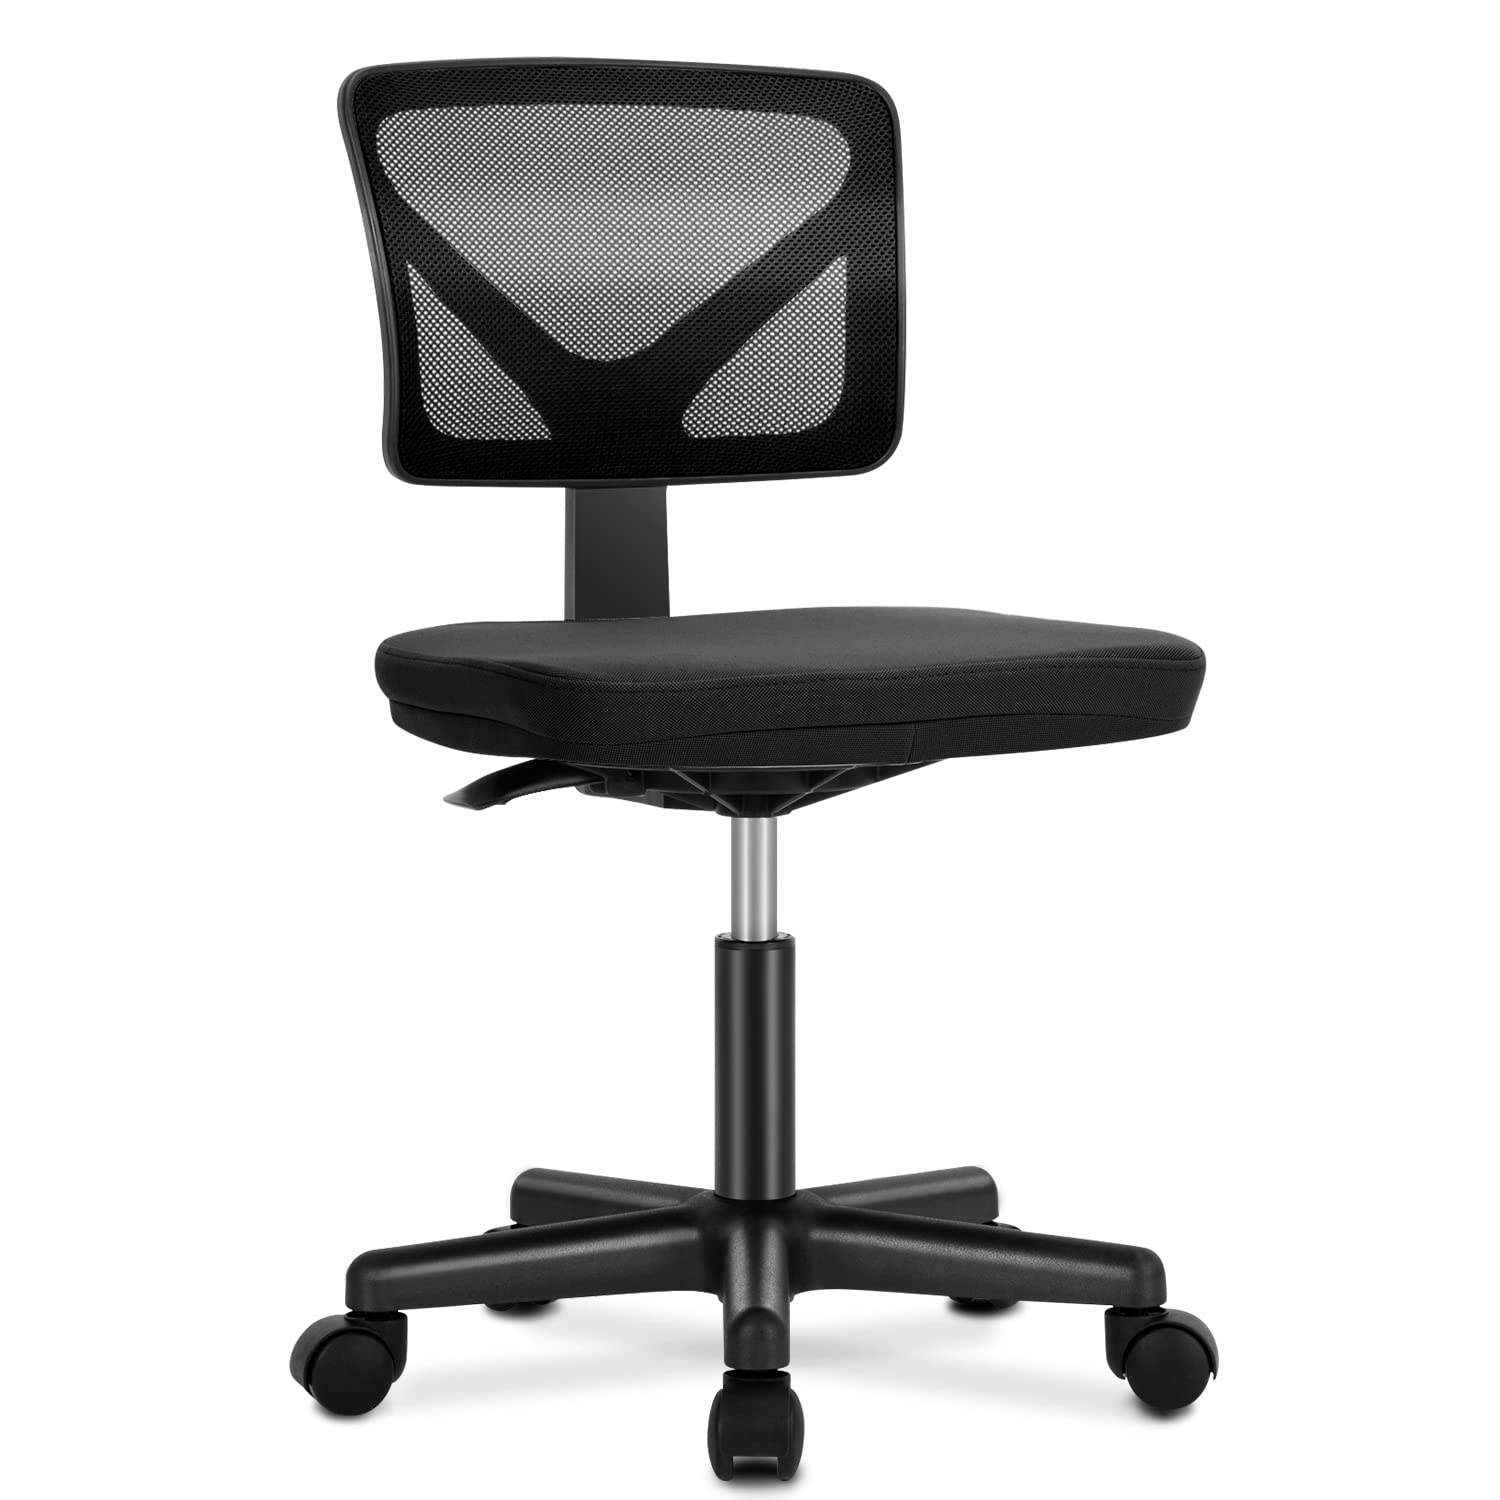 DUMOS Armless Ergonomic Desk Chairs (Black, Grey or Orange) $27 + Free Shipping w/ Prime or on $35+